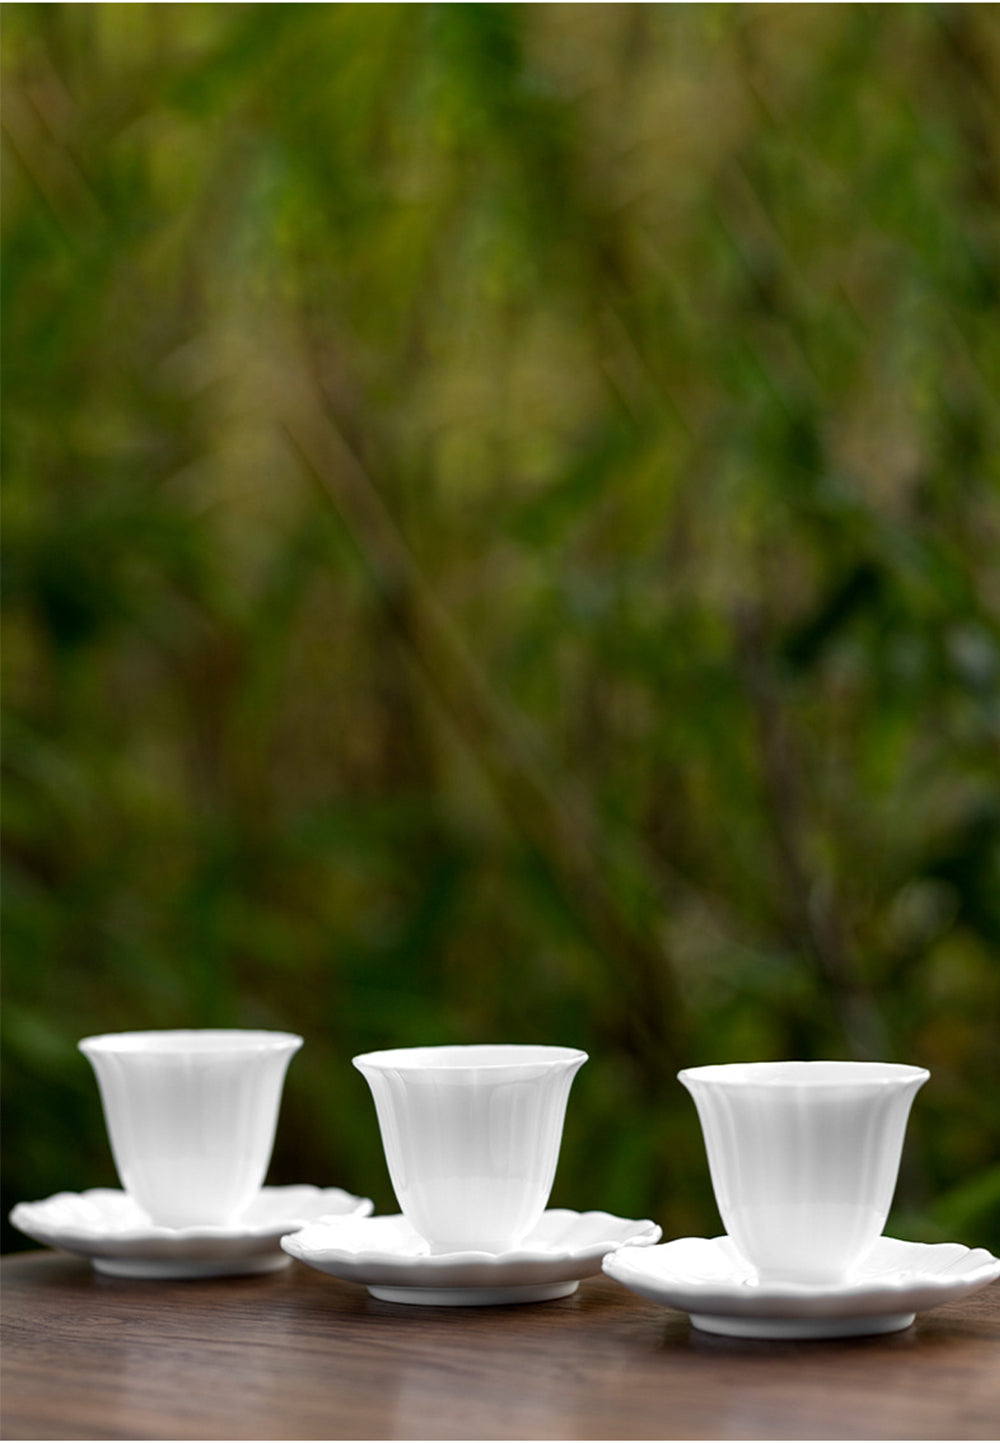 IwaiLoft 白磁 茶杯 2個セット 茶托付き 中国 台湾茶器 湯のみ 湯呑み お茶 カップ コップ 来客用 お茶用品 ティーウェア 中国茶器 台湾茶器 贈り物にも 食洗機対応 電子レンジ対応 80mL